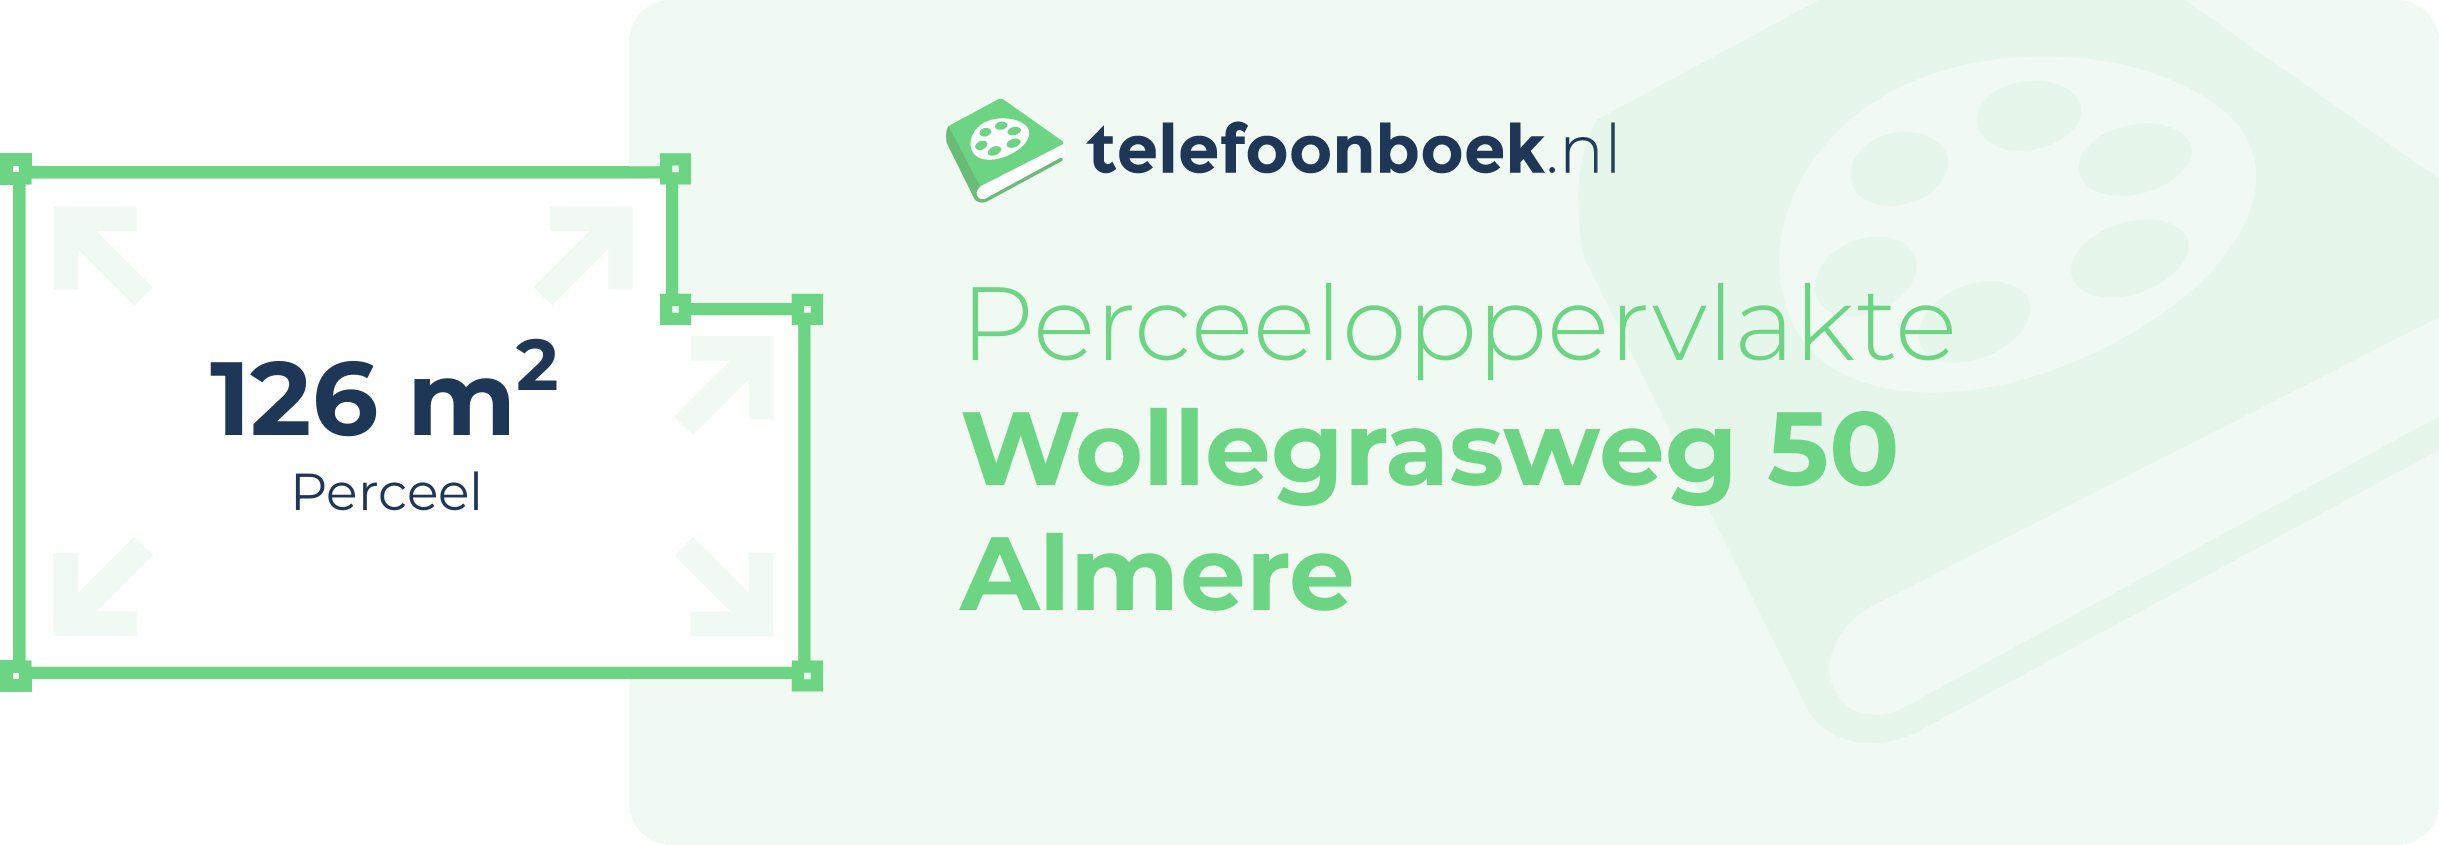 Perceeloppervlakte Wollegrasweg 50 Almere